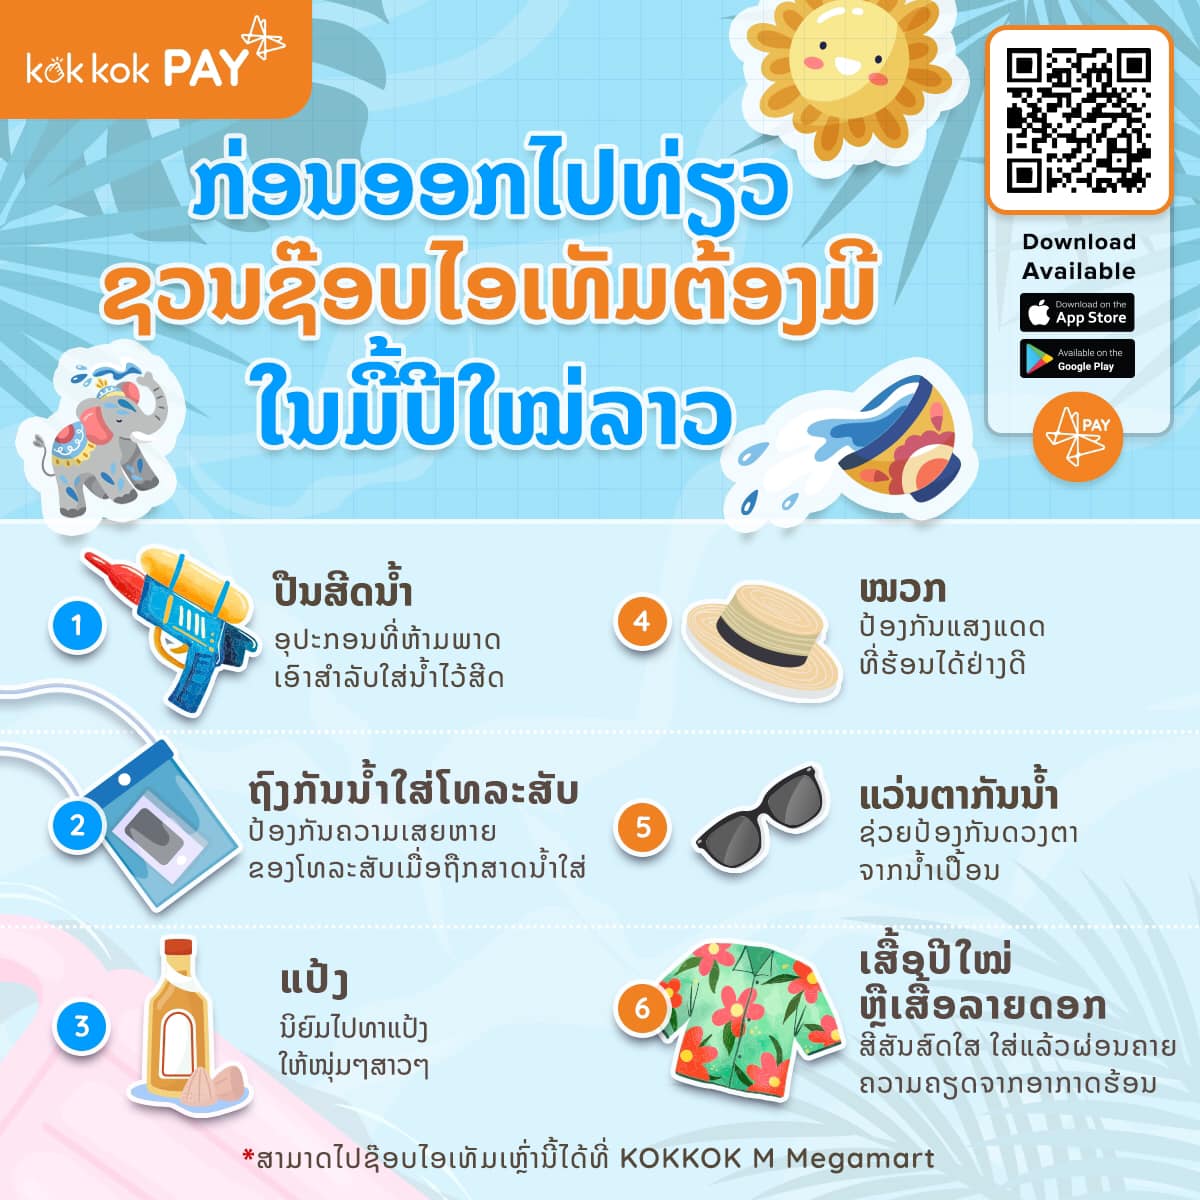 kokkok-pay-travel-songkran-day-happynewyears-lao